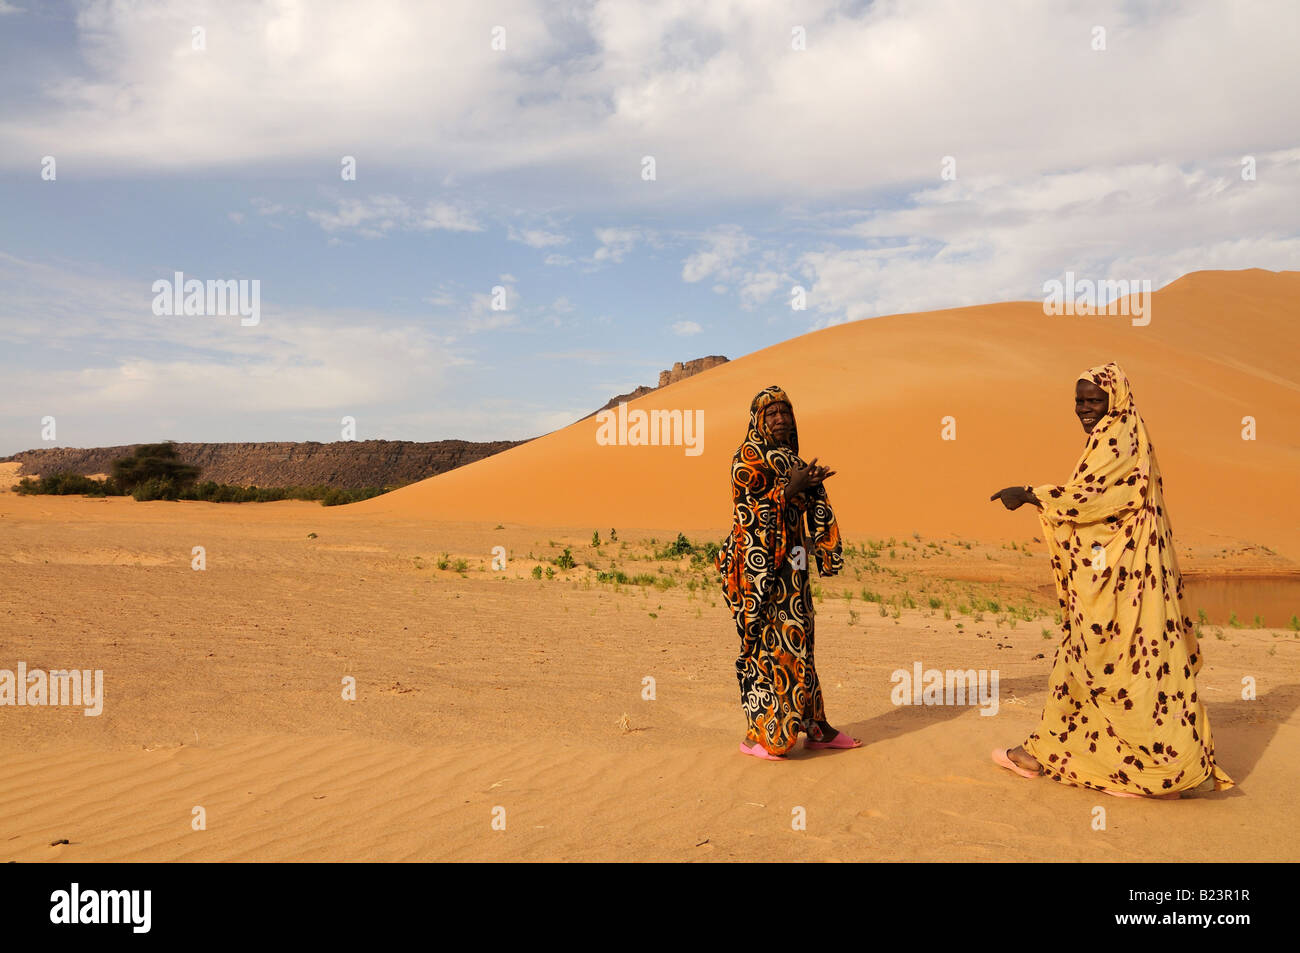 Bedouin women before Giant sand dune in the Sahara near Atar Western Africa Mauritania Africa Stock Photo